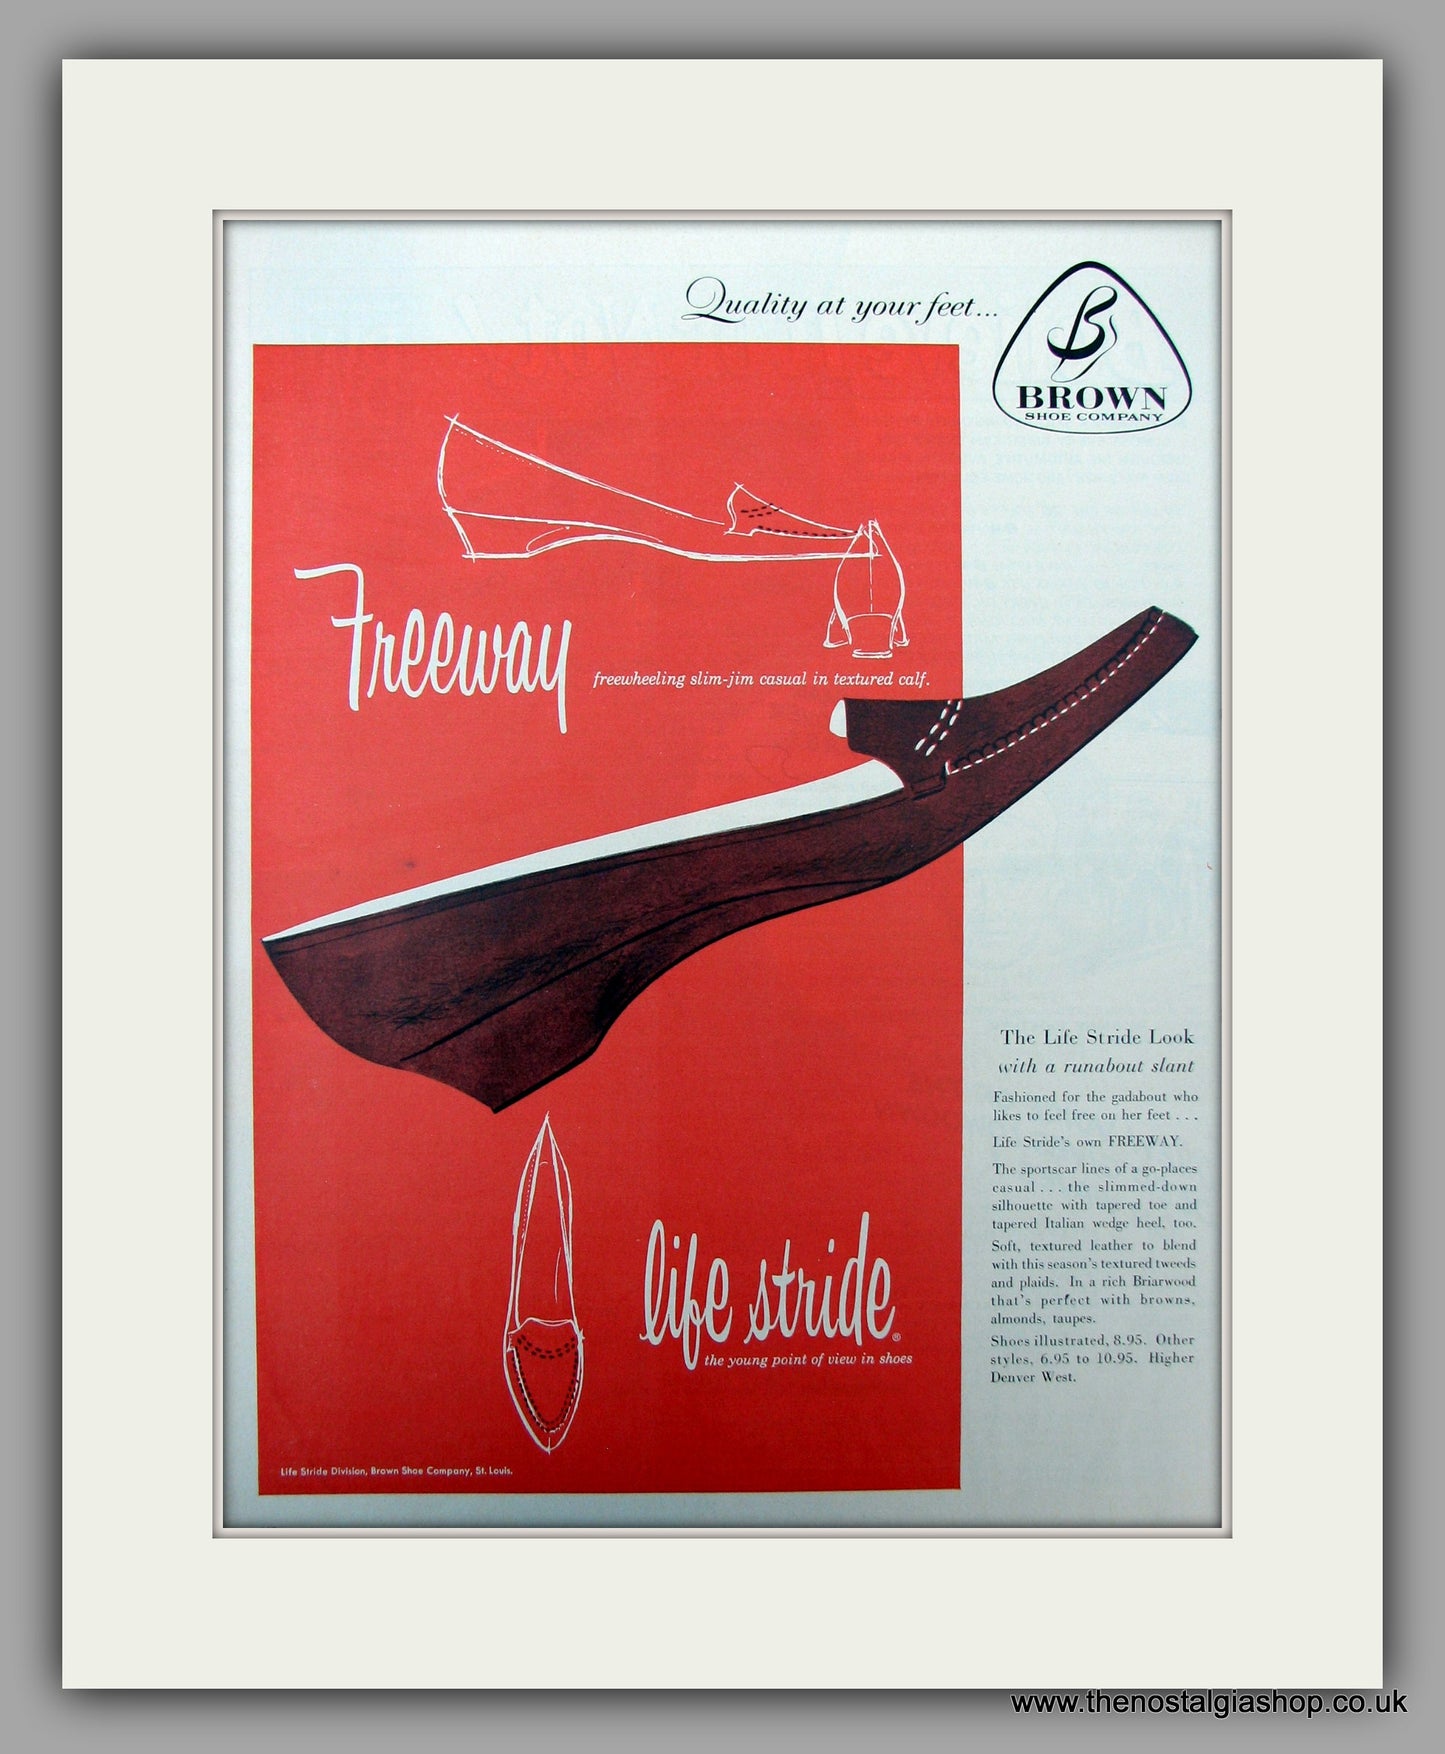 Brown Life Stride Shoes.  Original advert 1957 (ref AD10091)